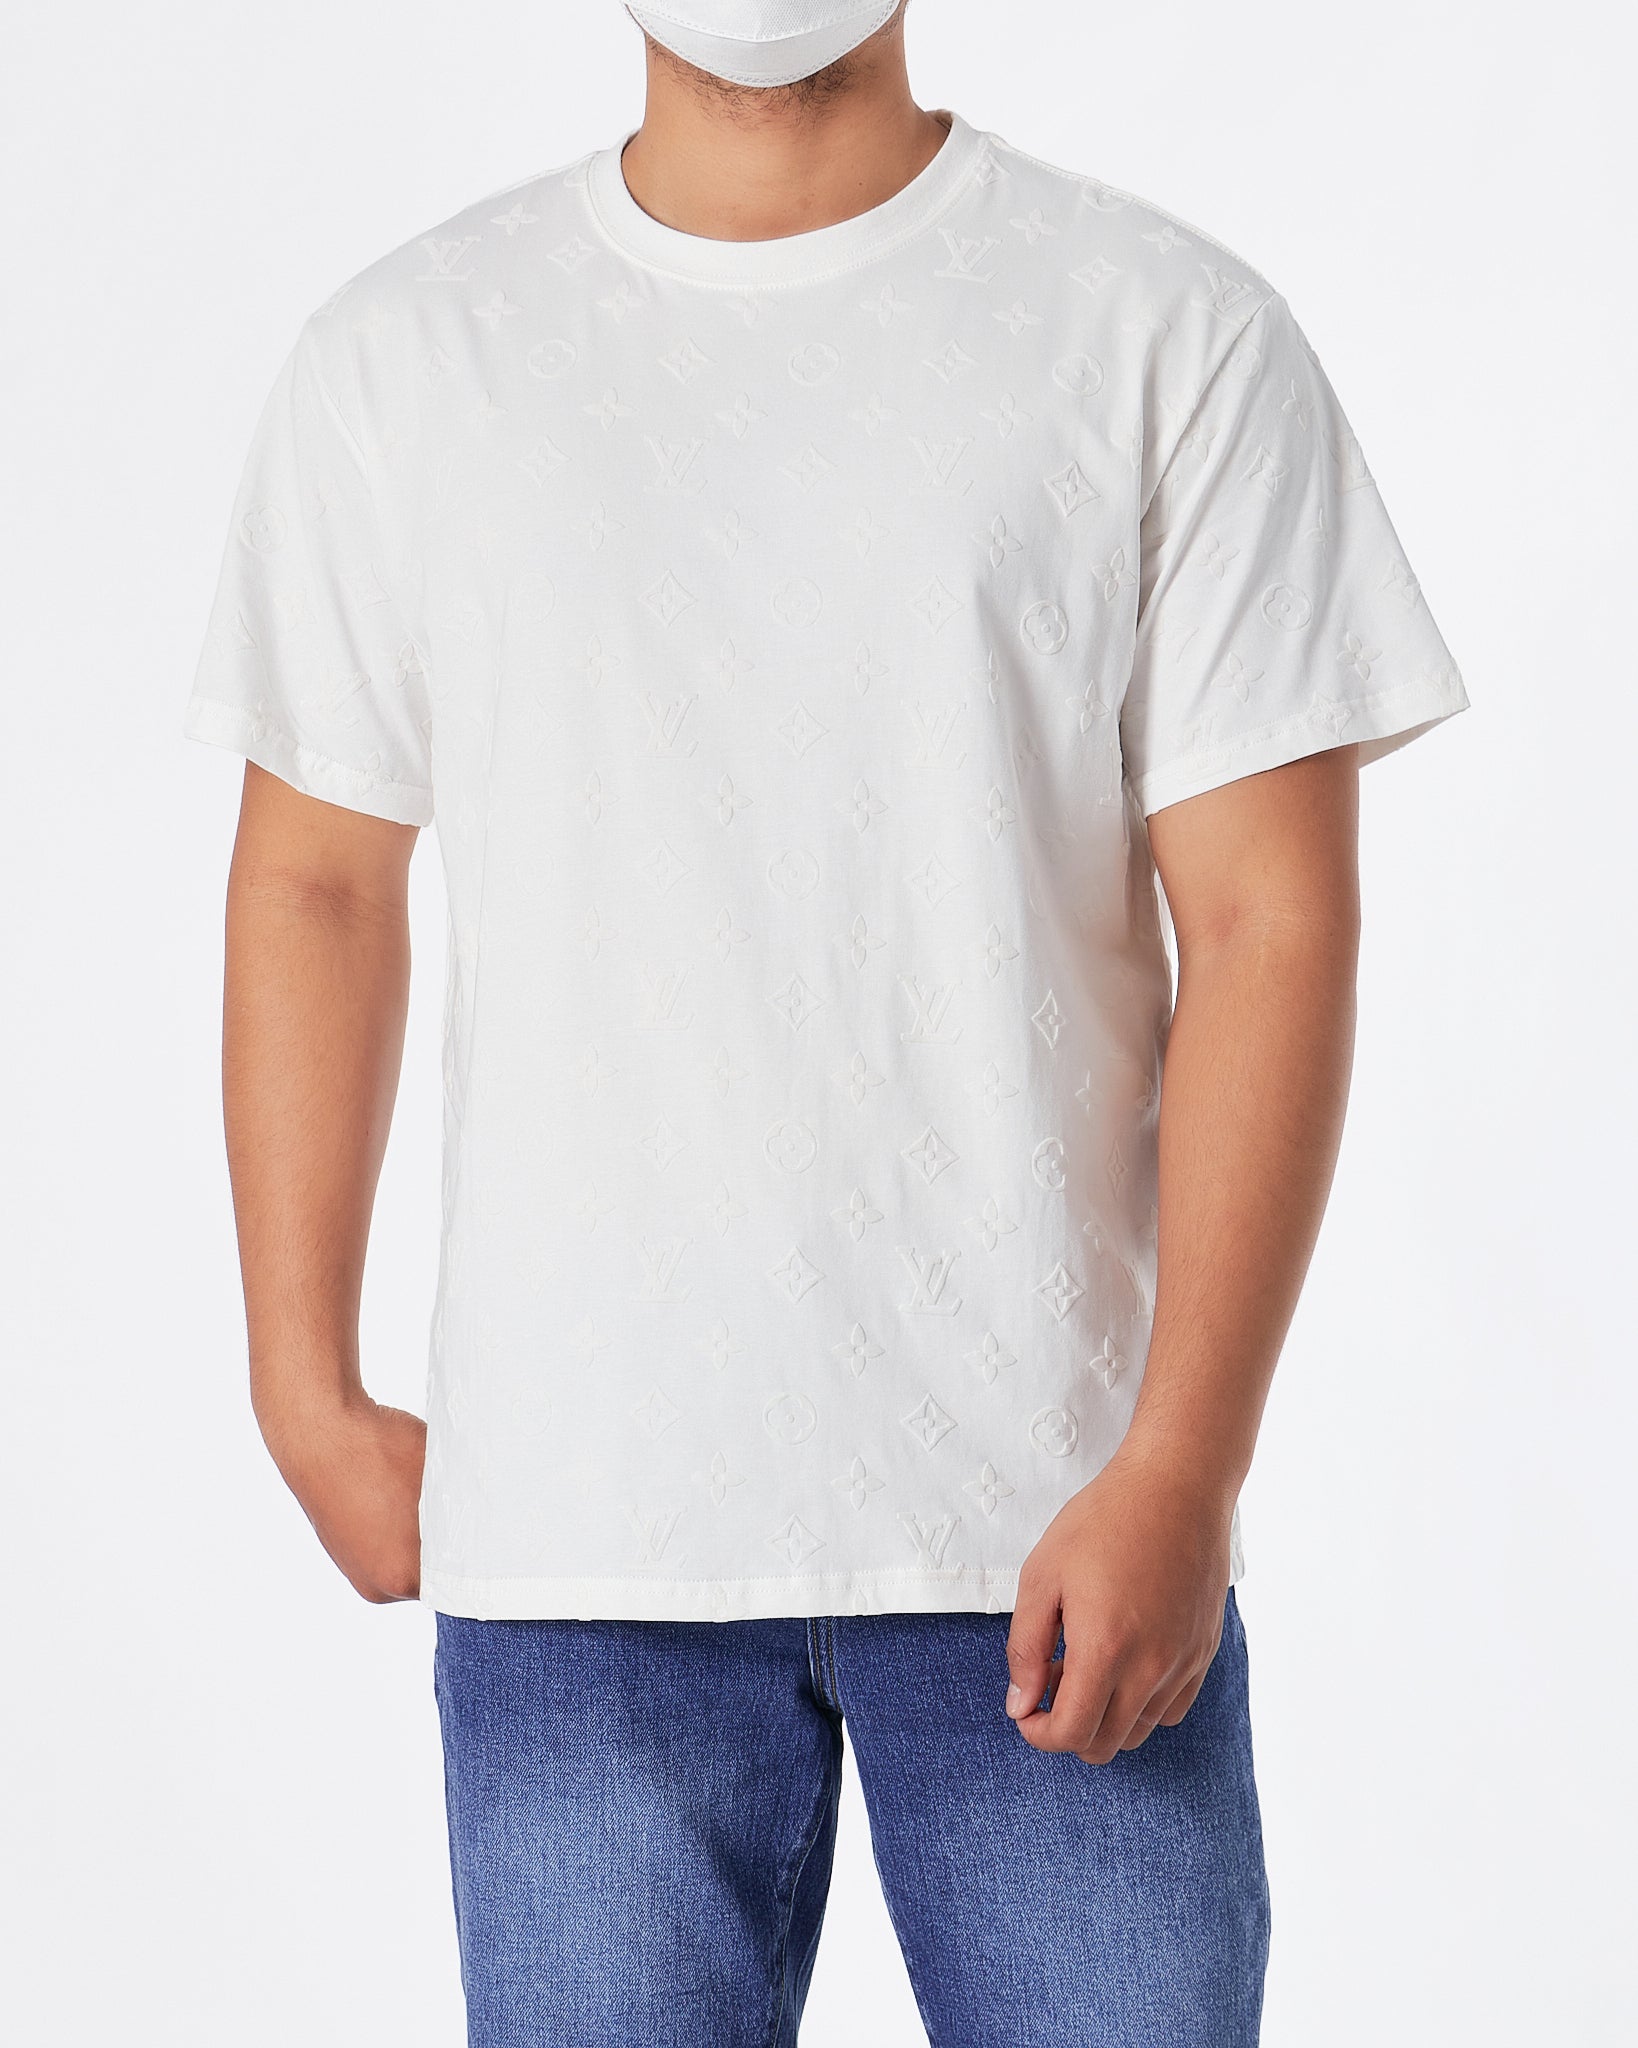 vuitton monogram shirt mens